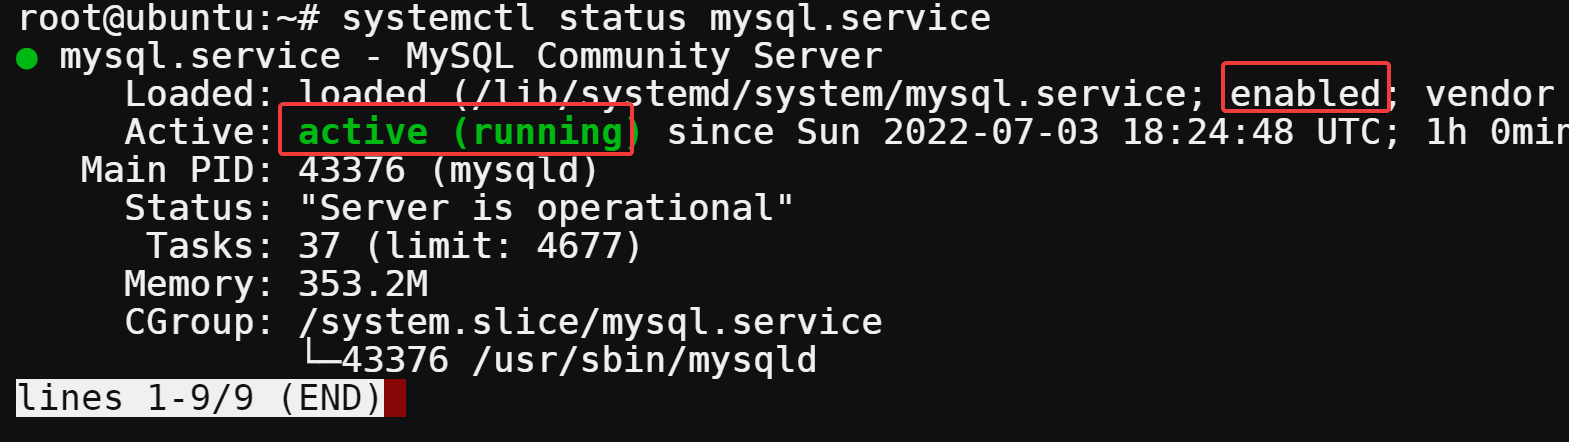 Verifying that the MySQL service is running